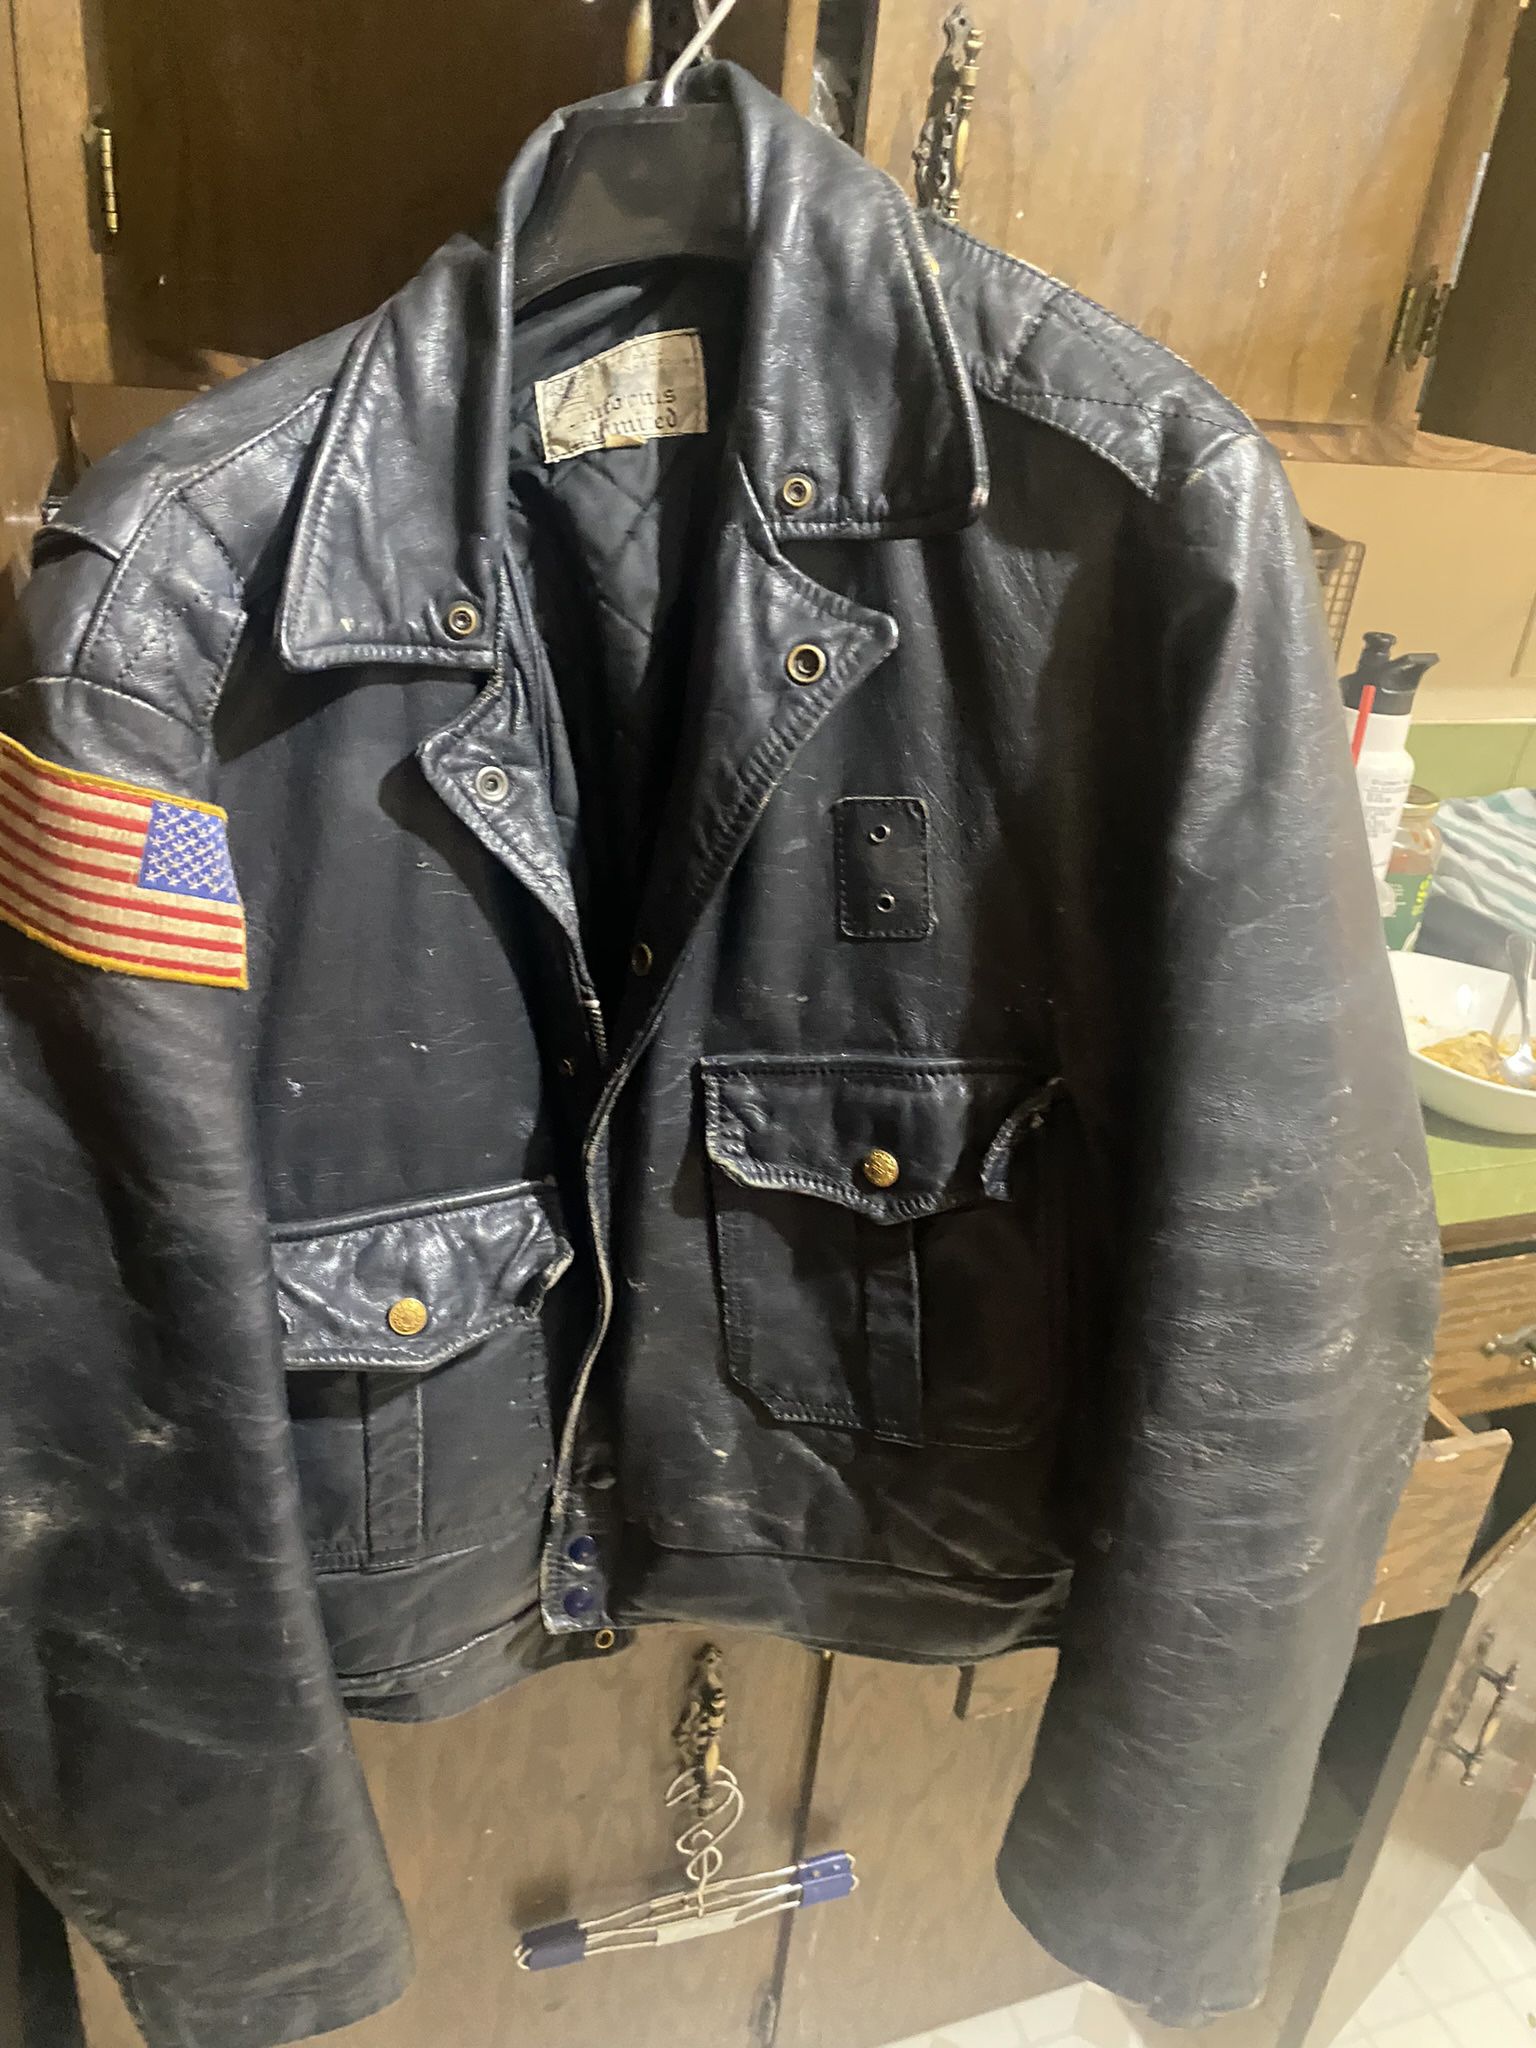 Authentic 60’s Era Police Officer’s Uniform Jacket